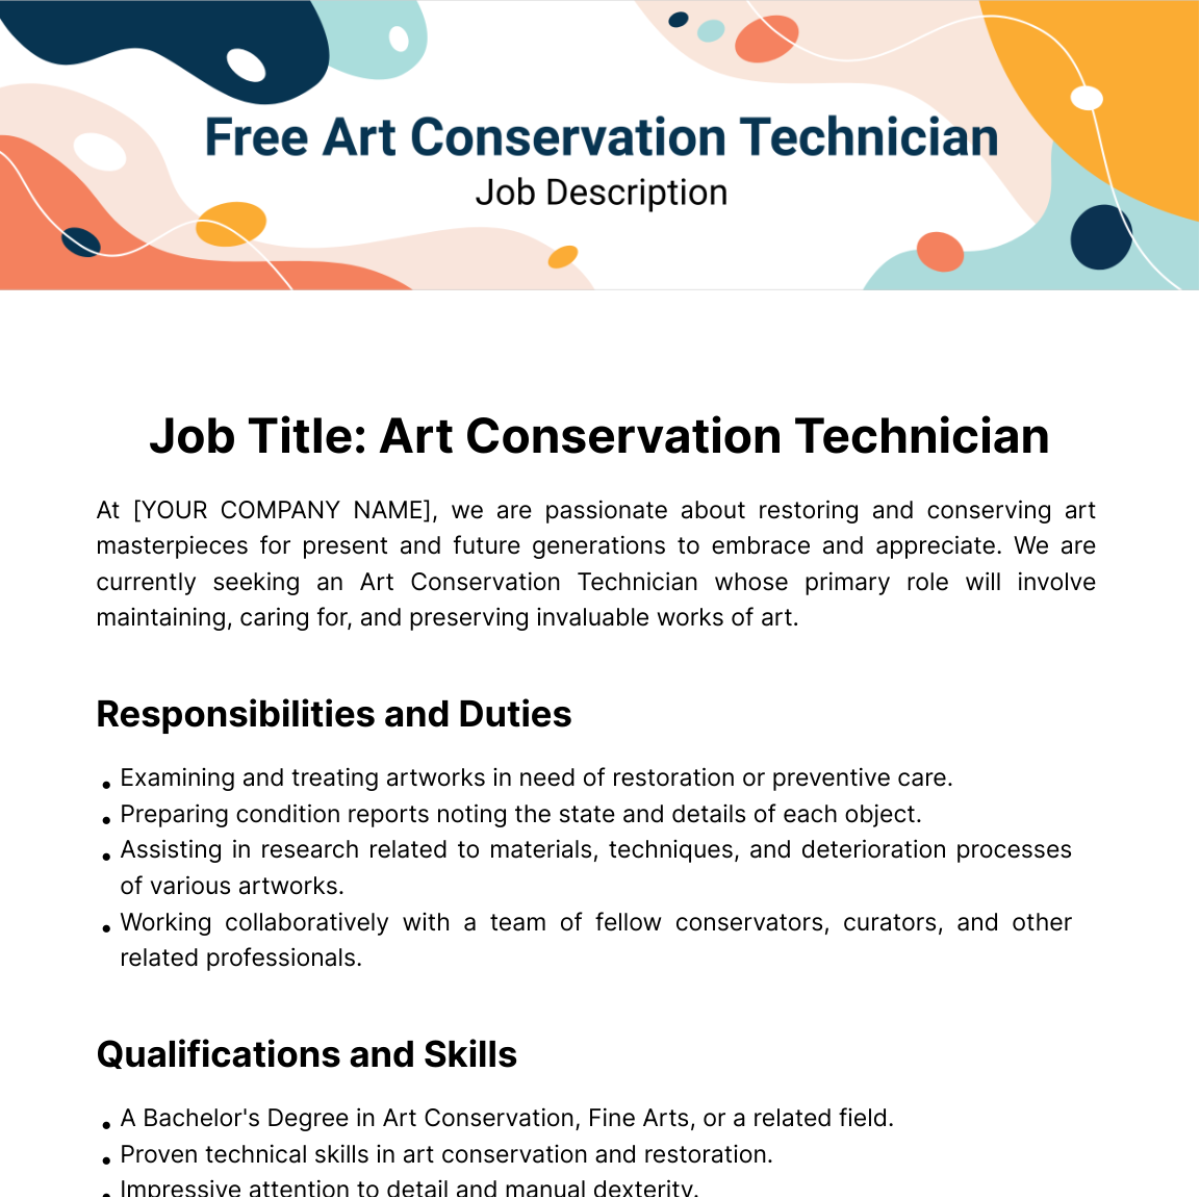 Art Conservation Technician Job Description Template